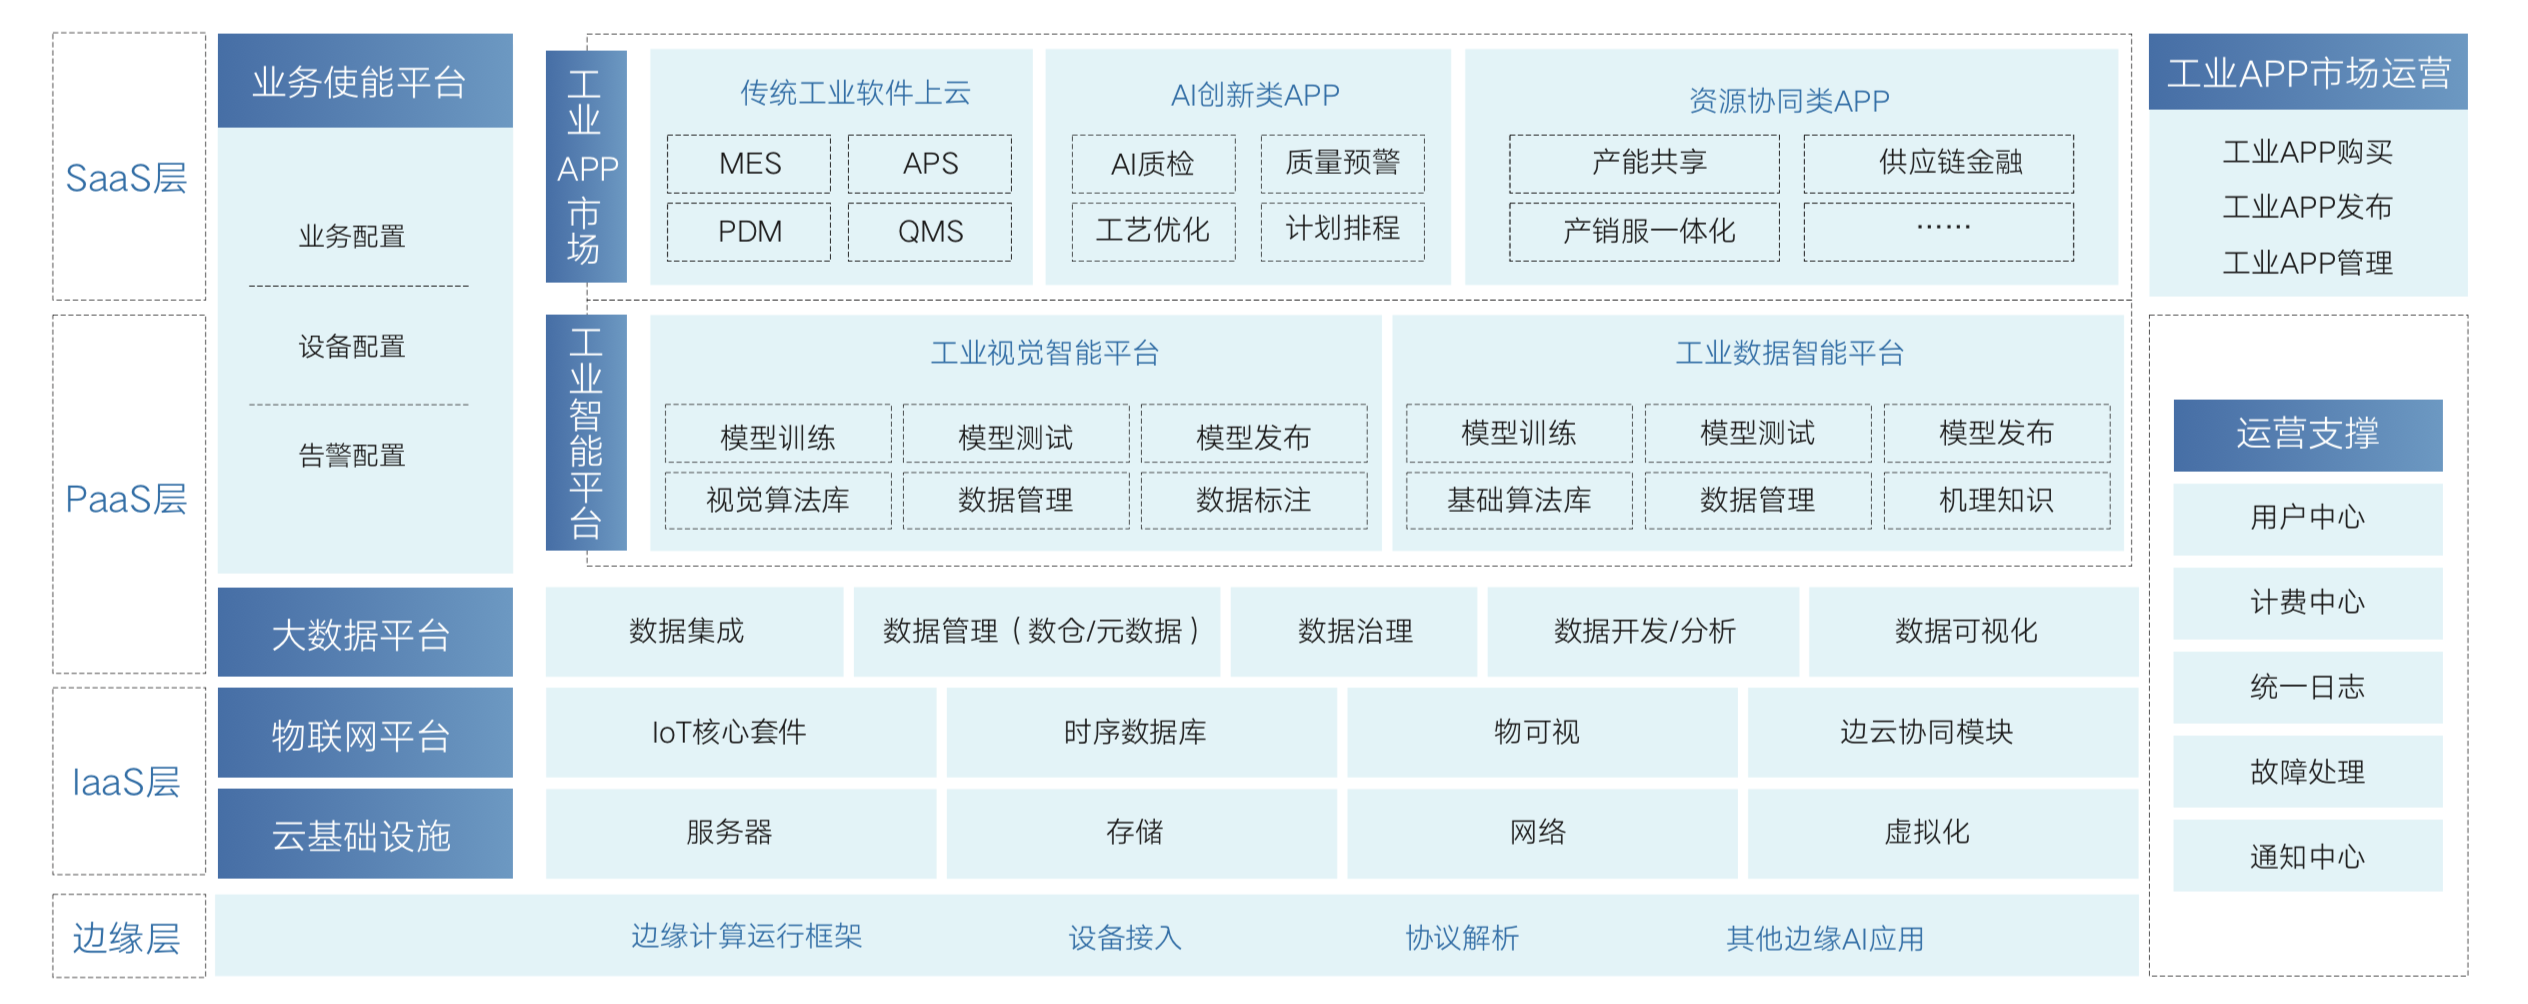 Baidu Cloud Industrial Internet Architecture